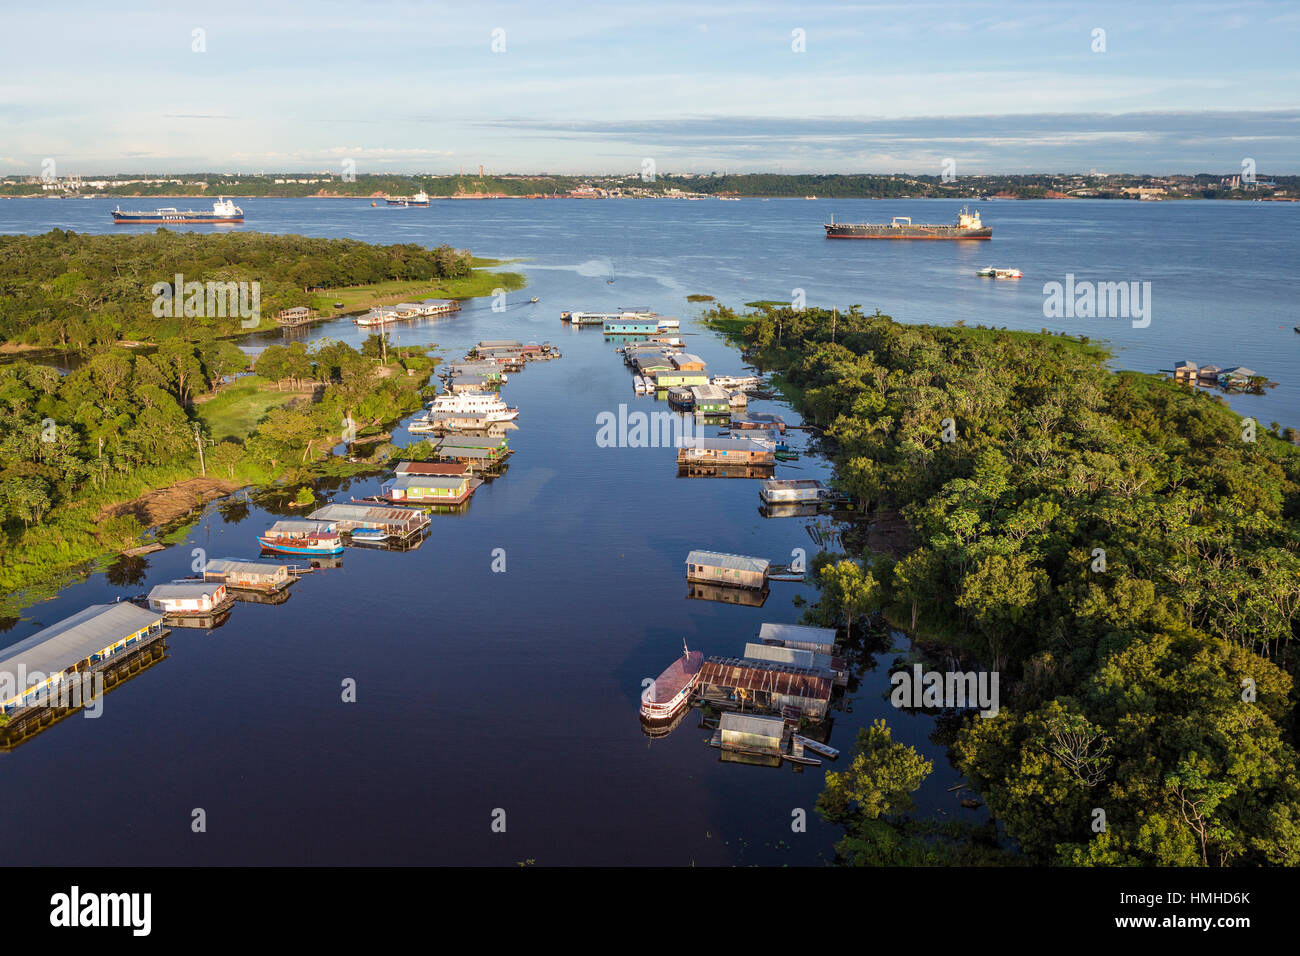 A floating community near Manaus in the Amazon, Brazil on the Rio Negro (Black River). The Rio Negro and the Amazon River are one and the same. Rainfa Stock Photo